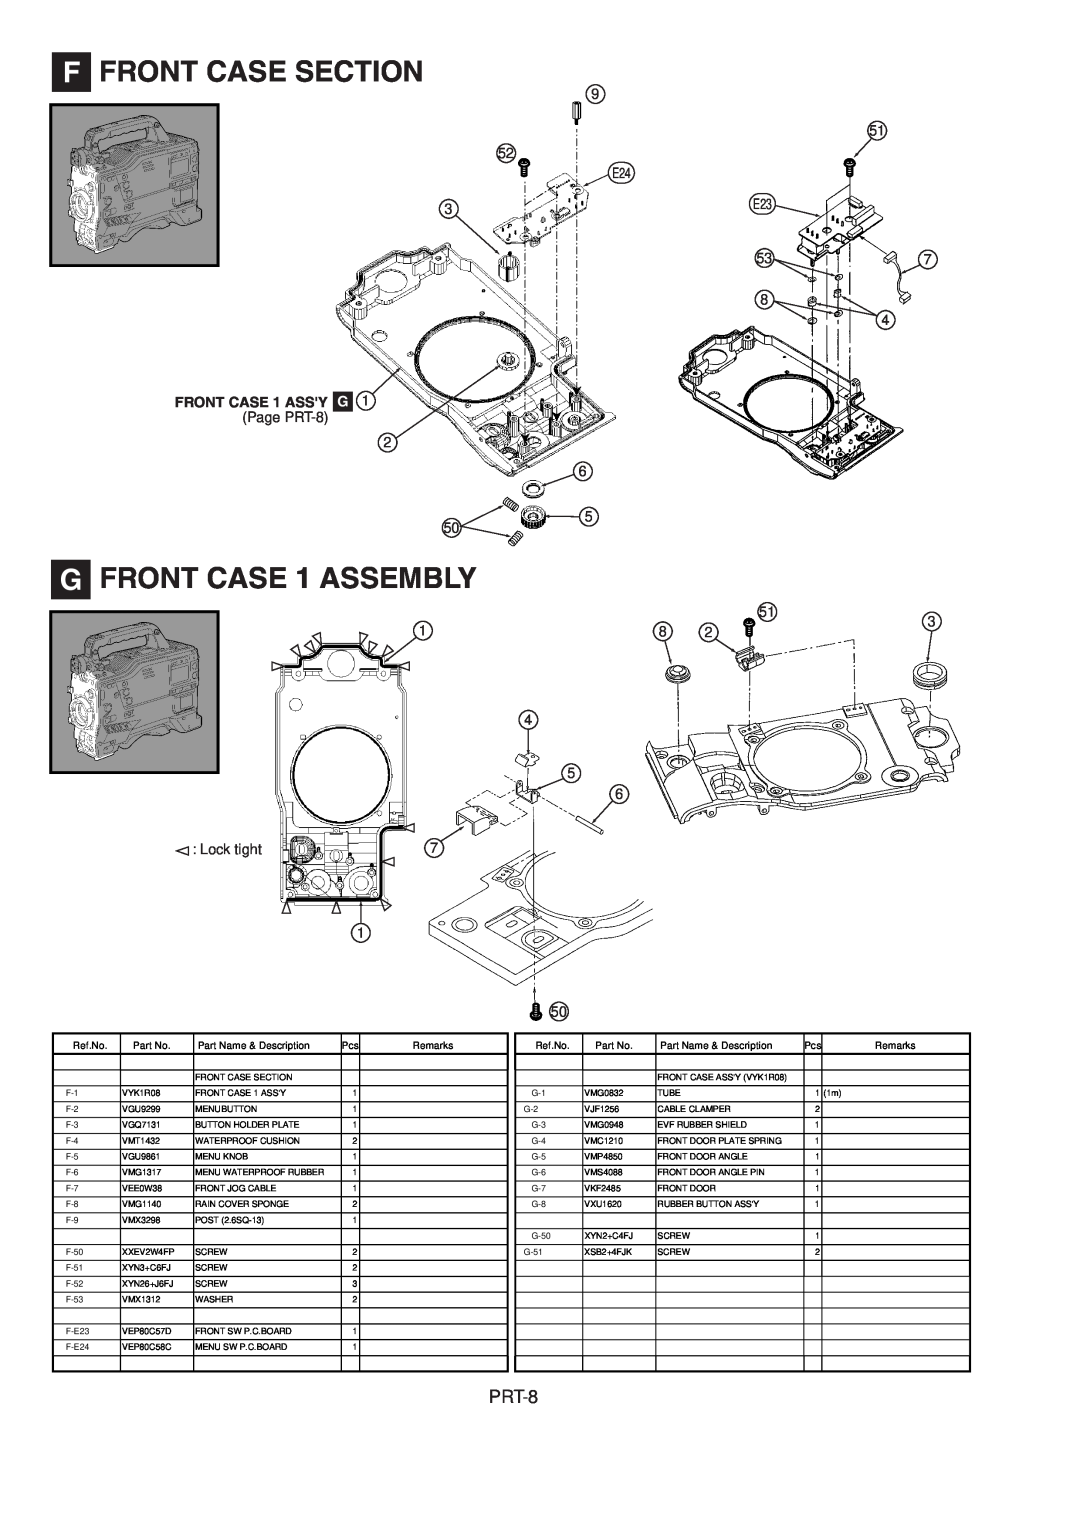 Panasonic AJ-HDX900MC manual F Front Case Section, G FRONT CASE 1 ASSEMBLY, FRONT CASE 1 ASSY G, Page PRT-8, Lock tight 